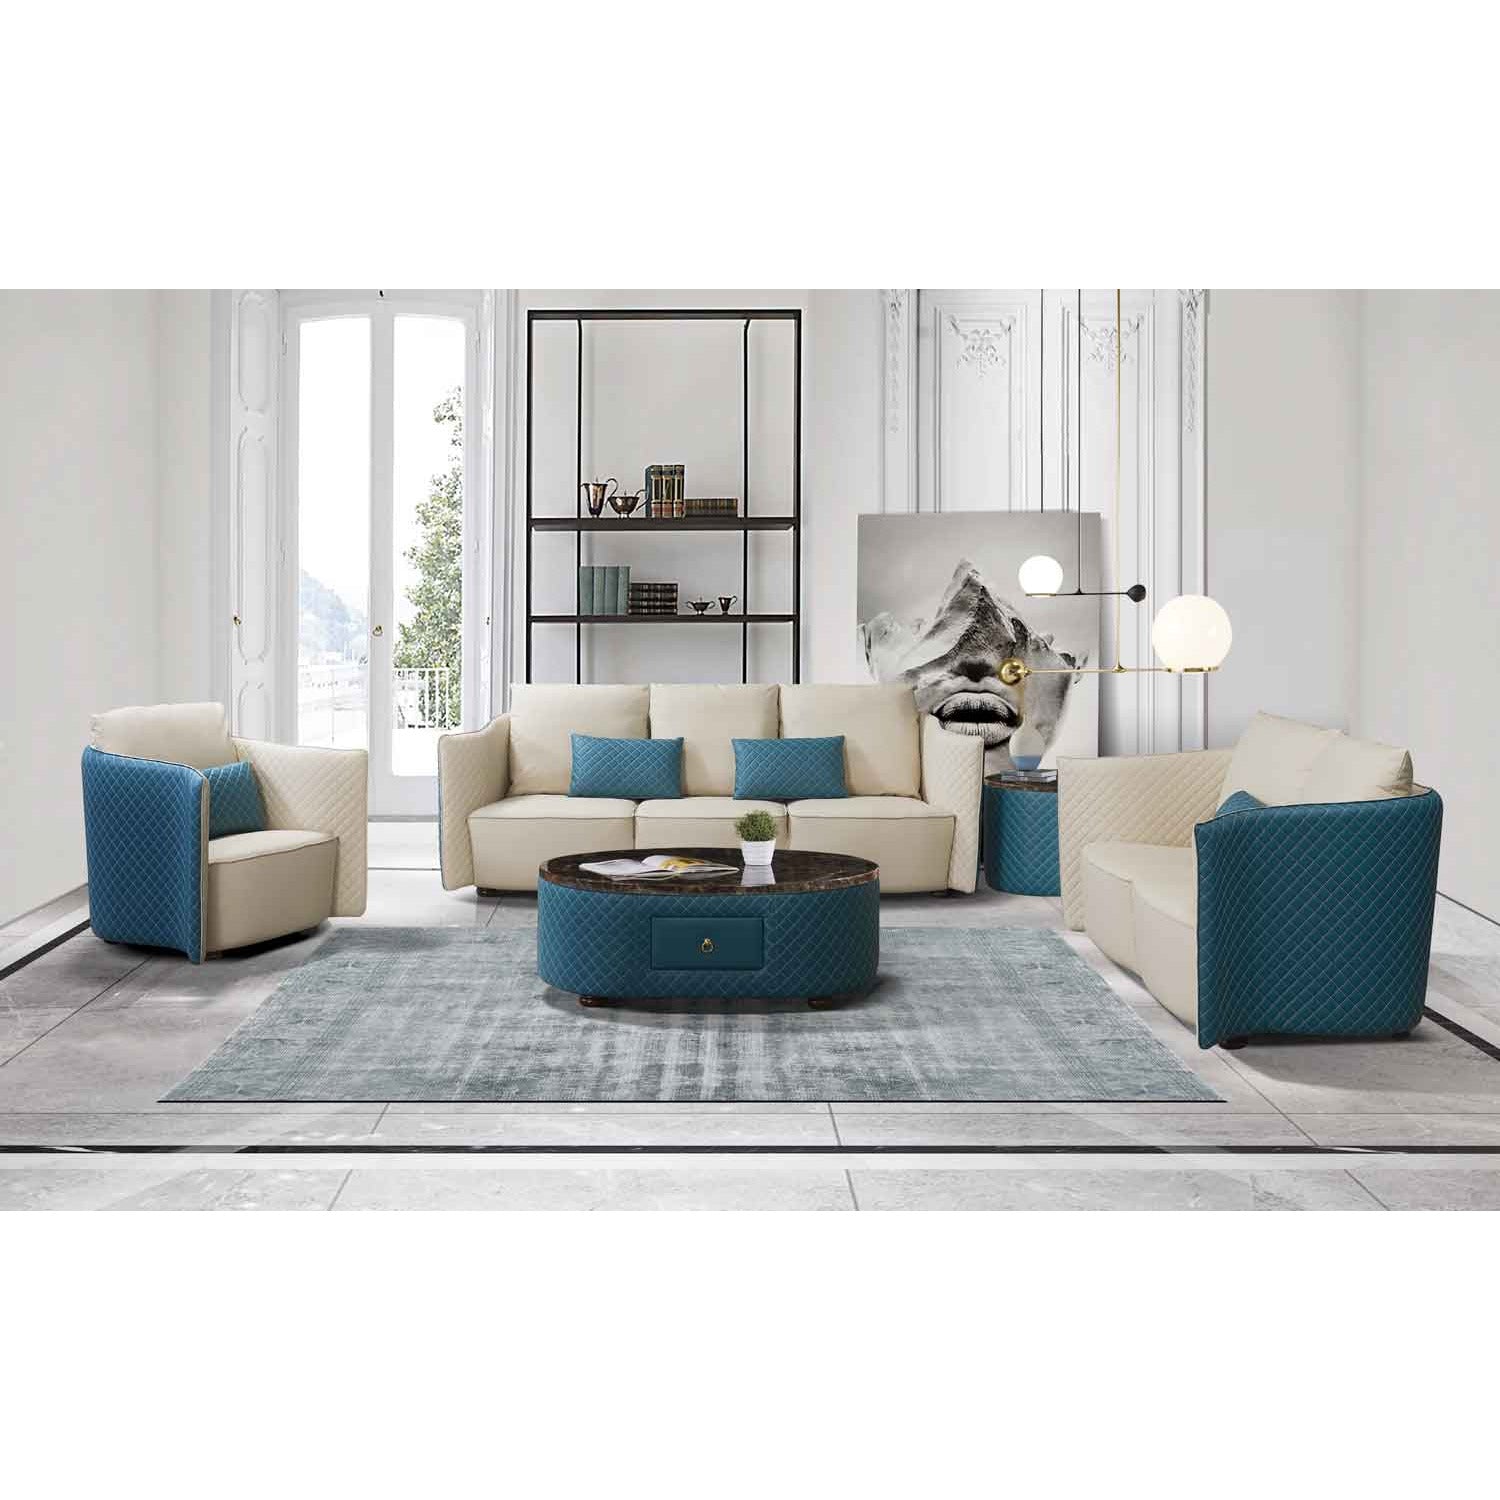 European Furniture - Makassar Loveseat in Sand Beige & Blue - 52554-L - New Star Living